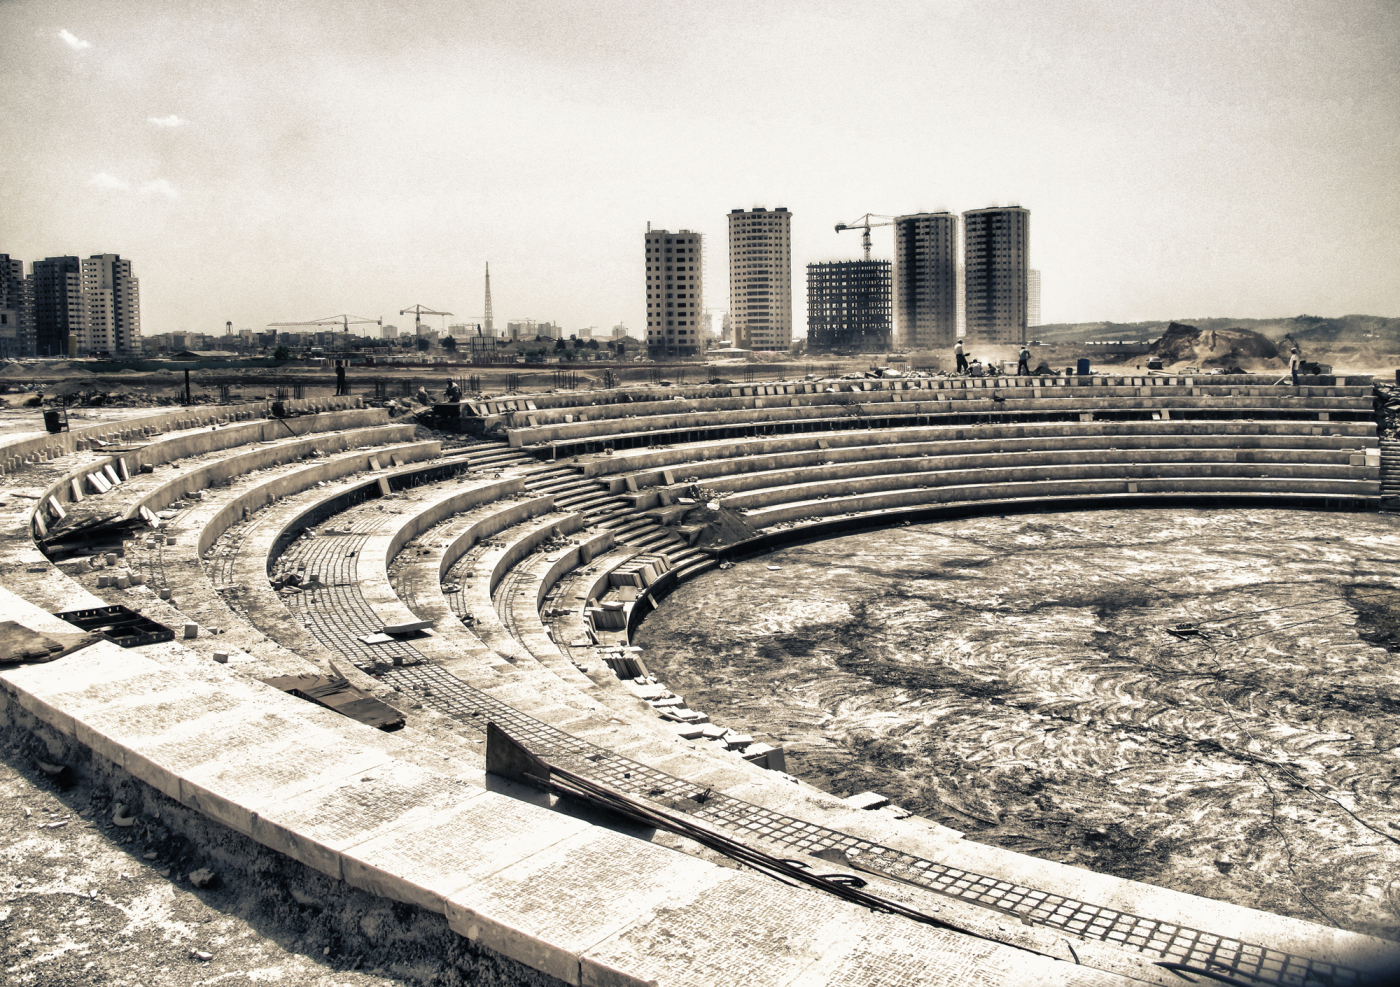 East Amphitheater under construction